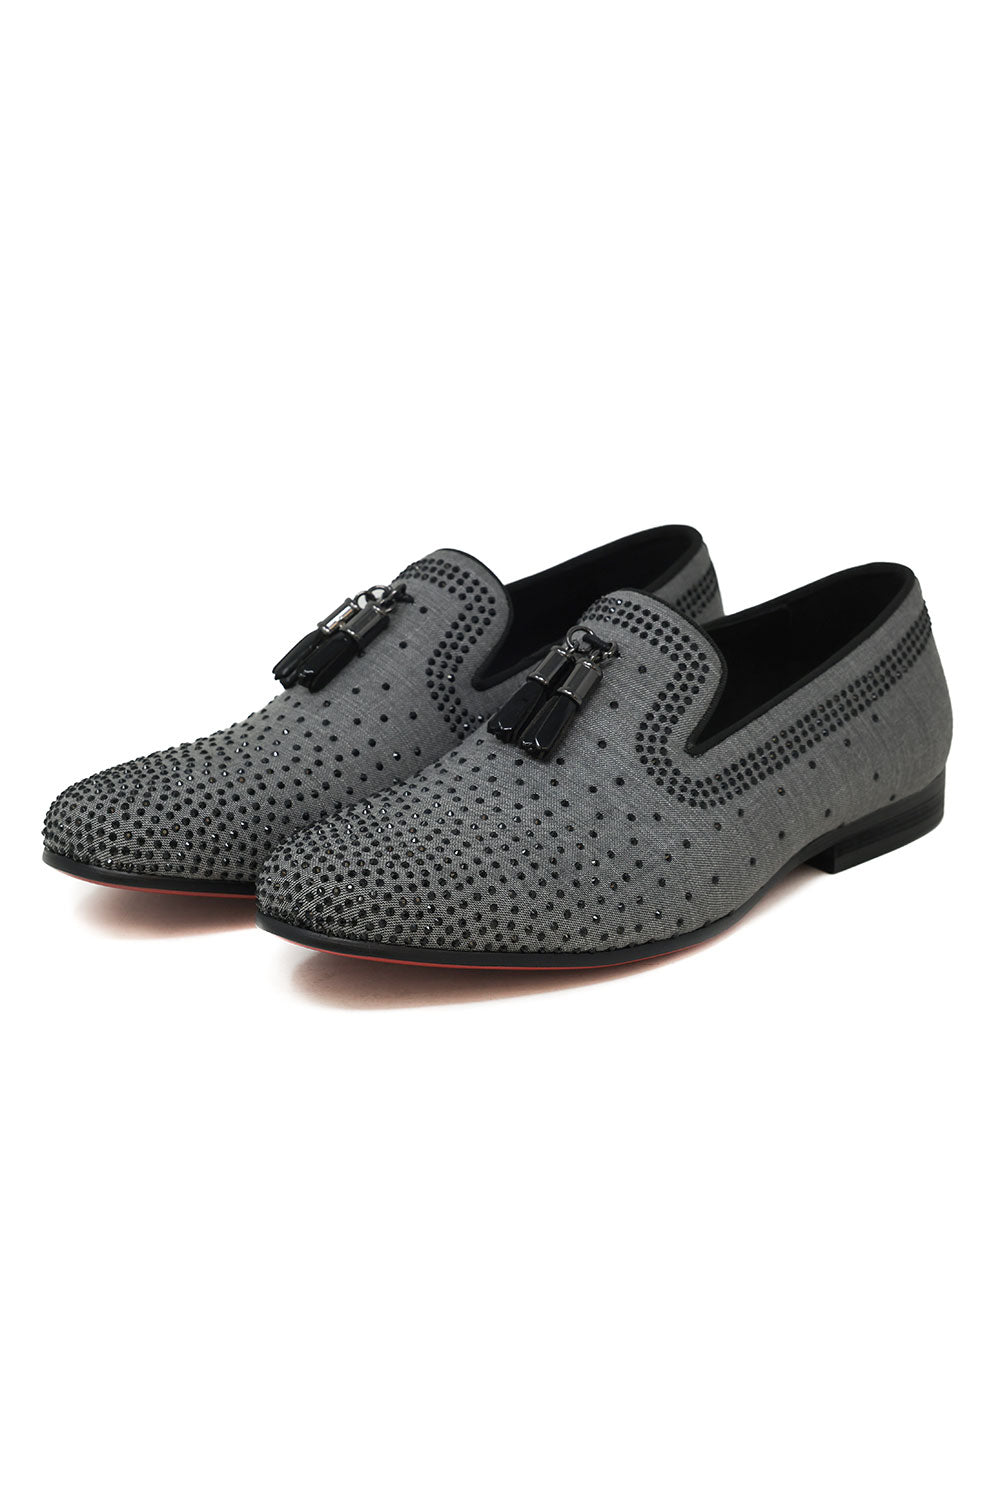 Barabas Men's Rhinestone Slip On Luxury Dress Shoes 2ESH3 Grey